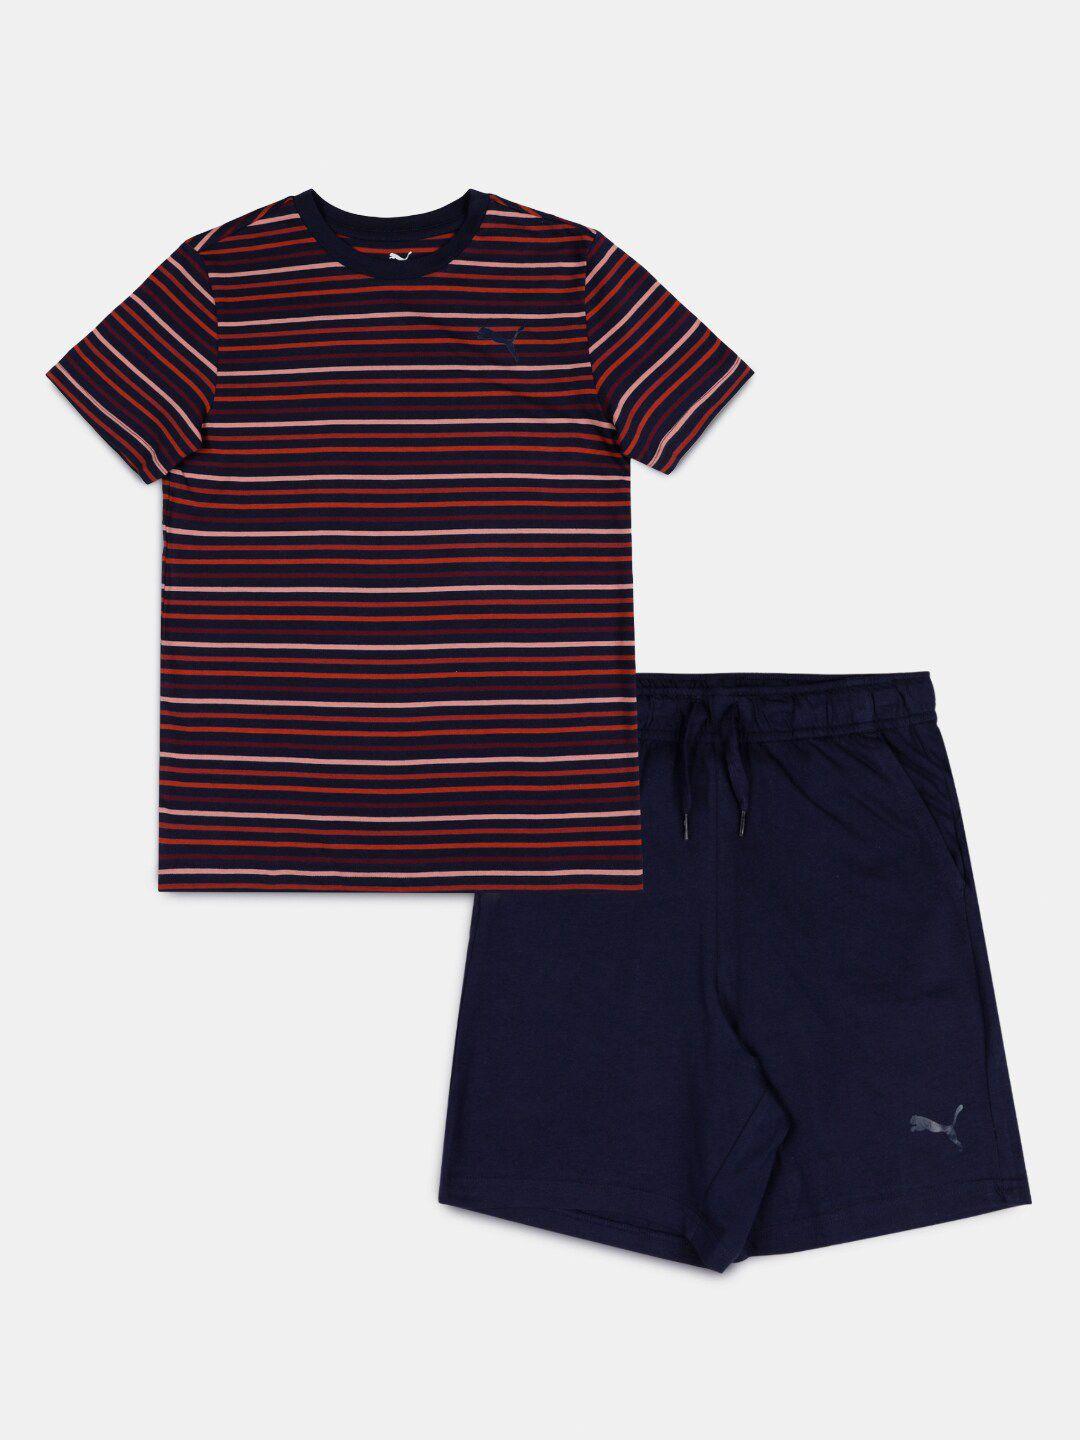 puma boys blue & maroon striped t-shirt with shorts